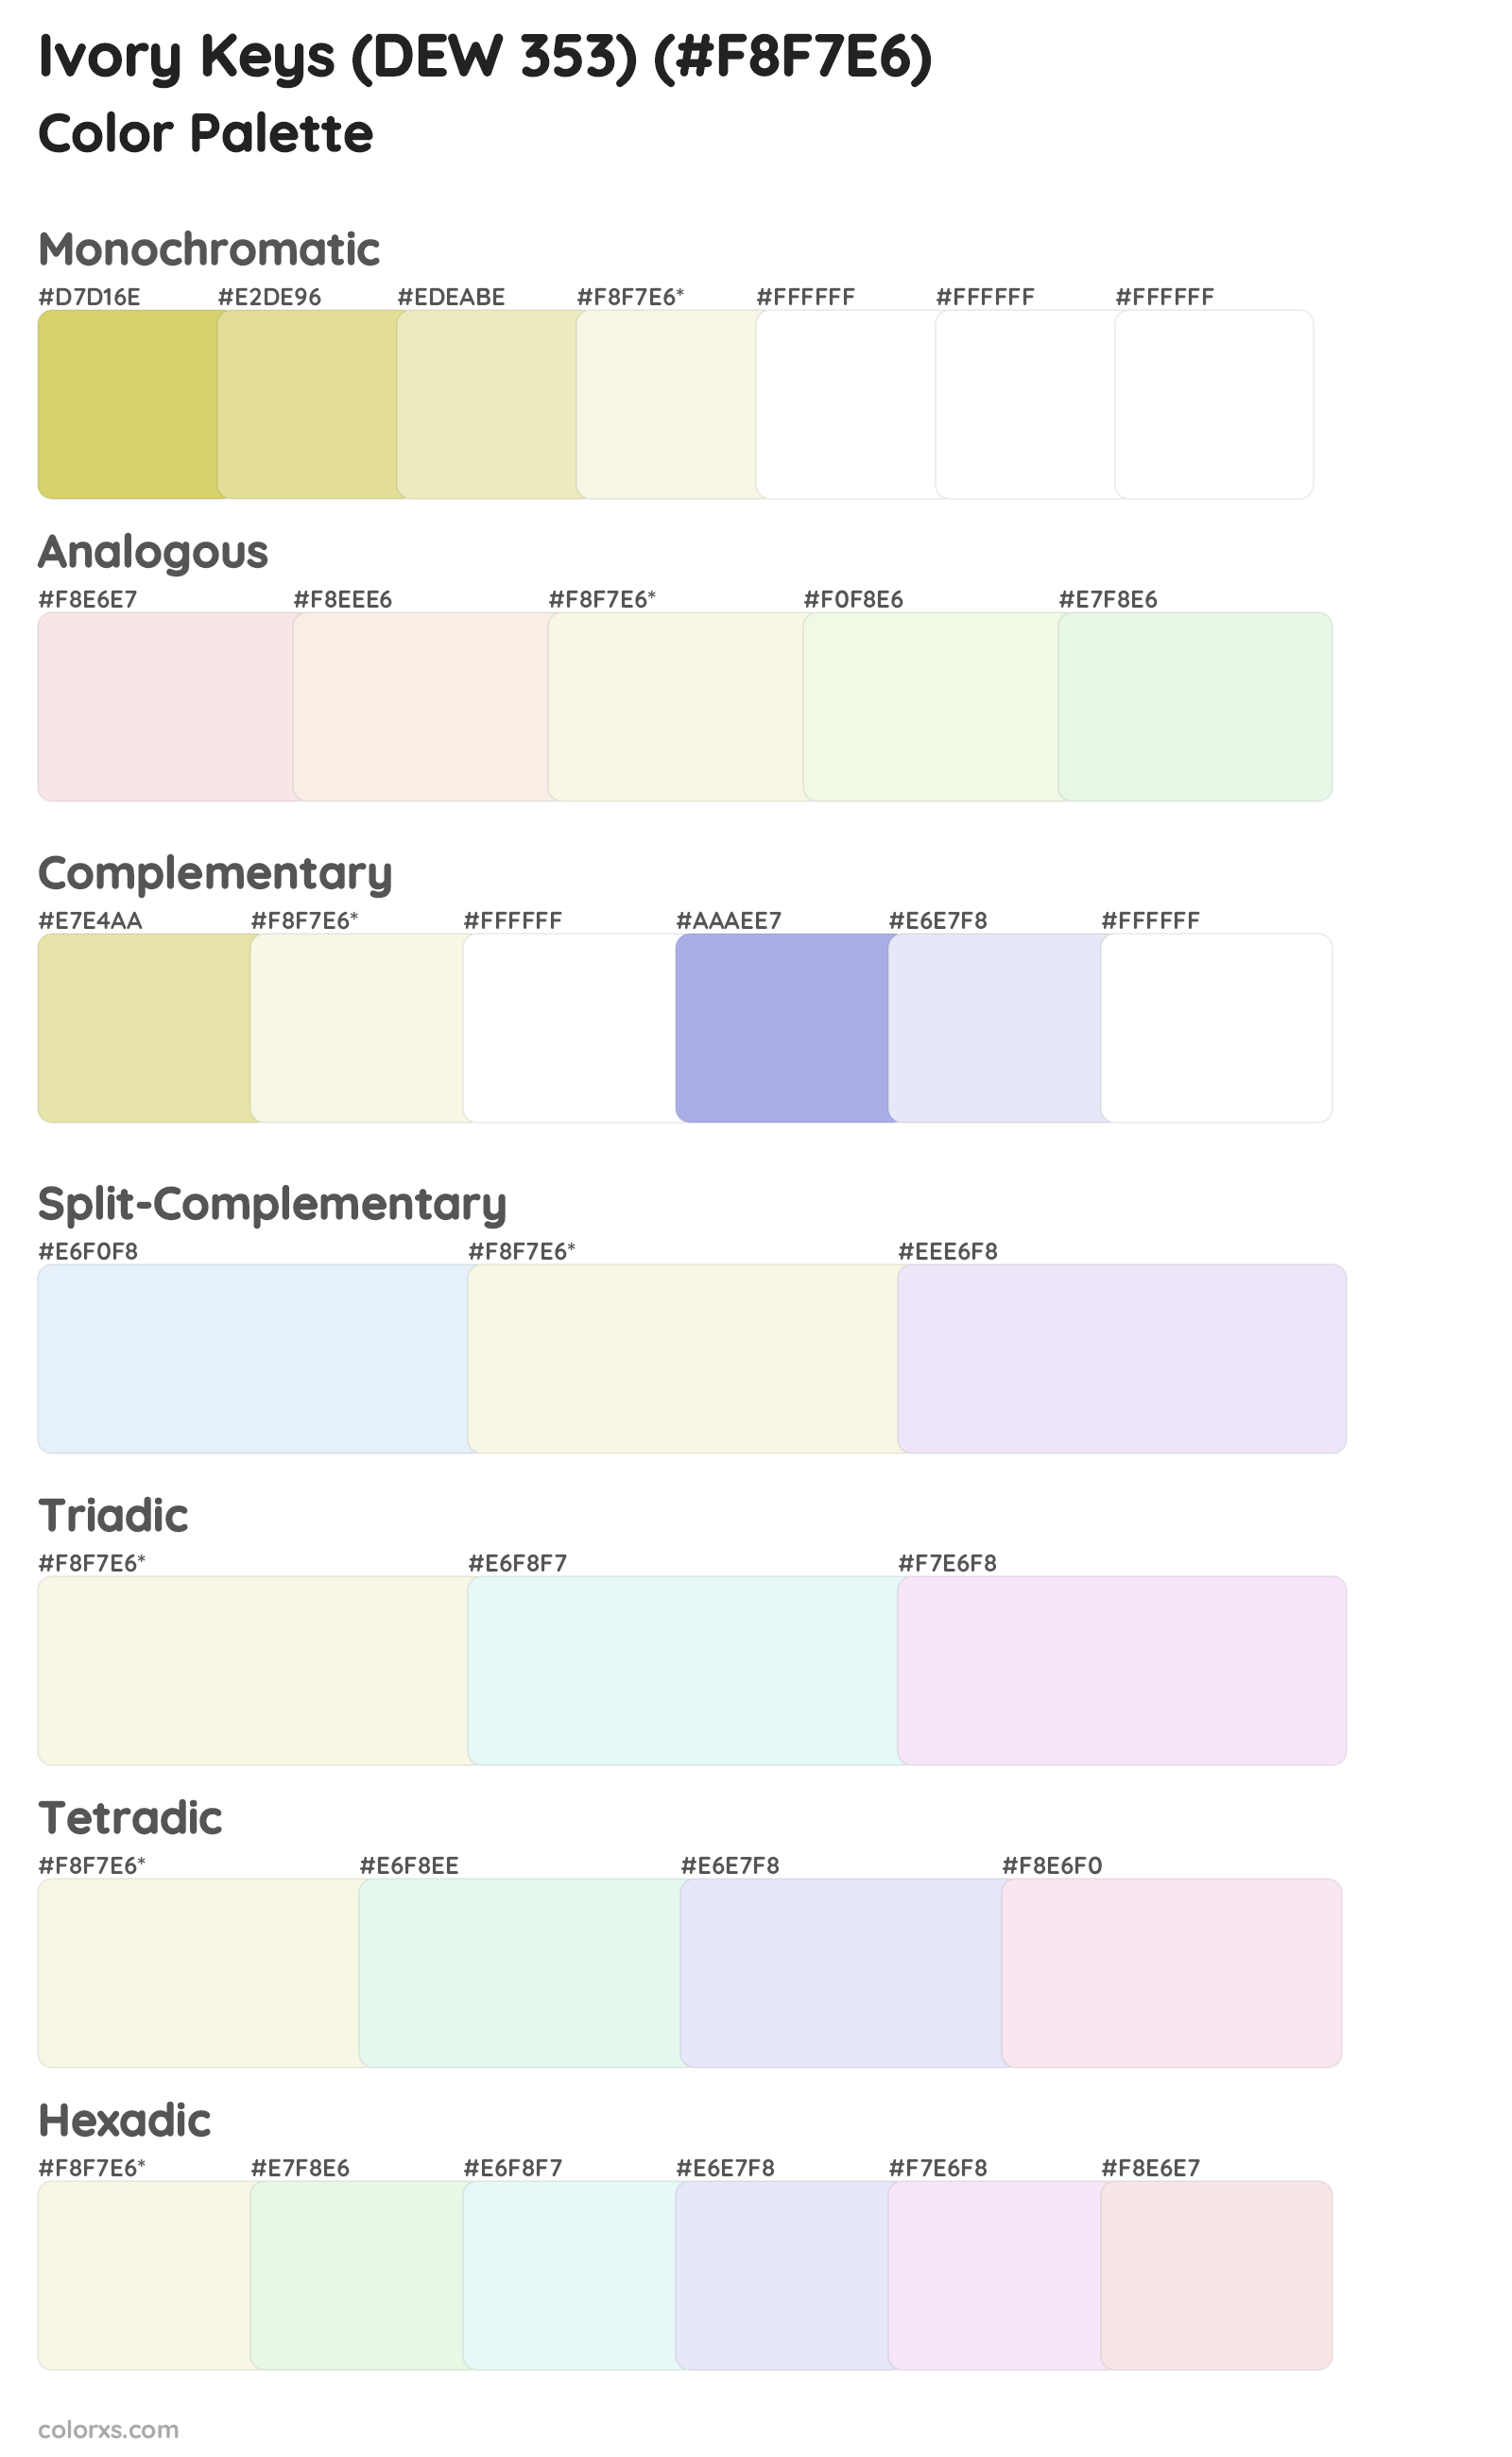 Ivory Keys (DEW 353) Color Scheme Palettes